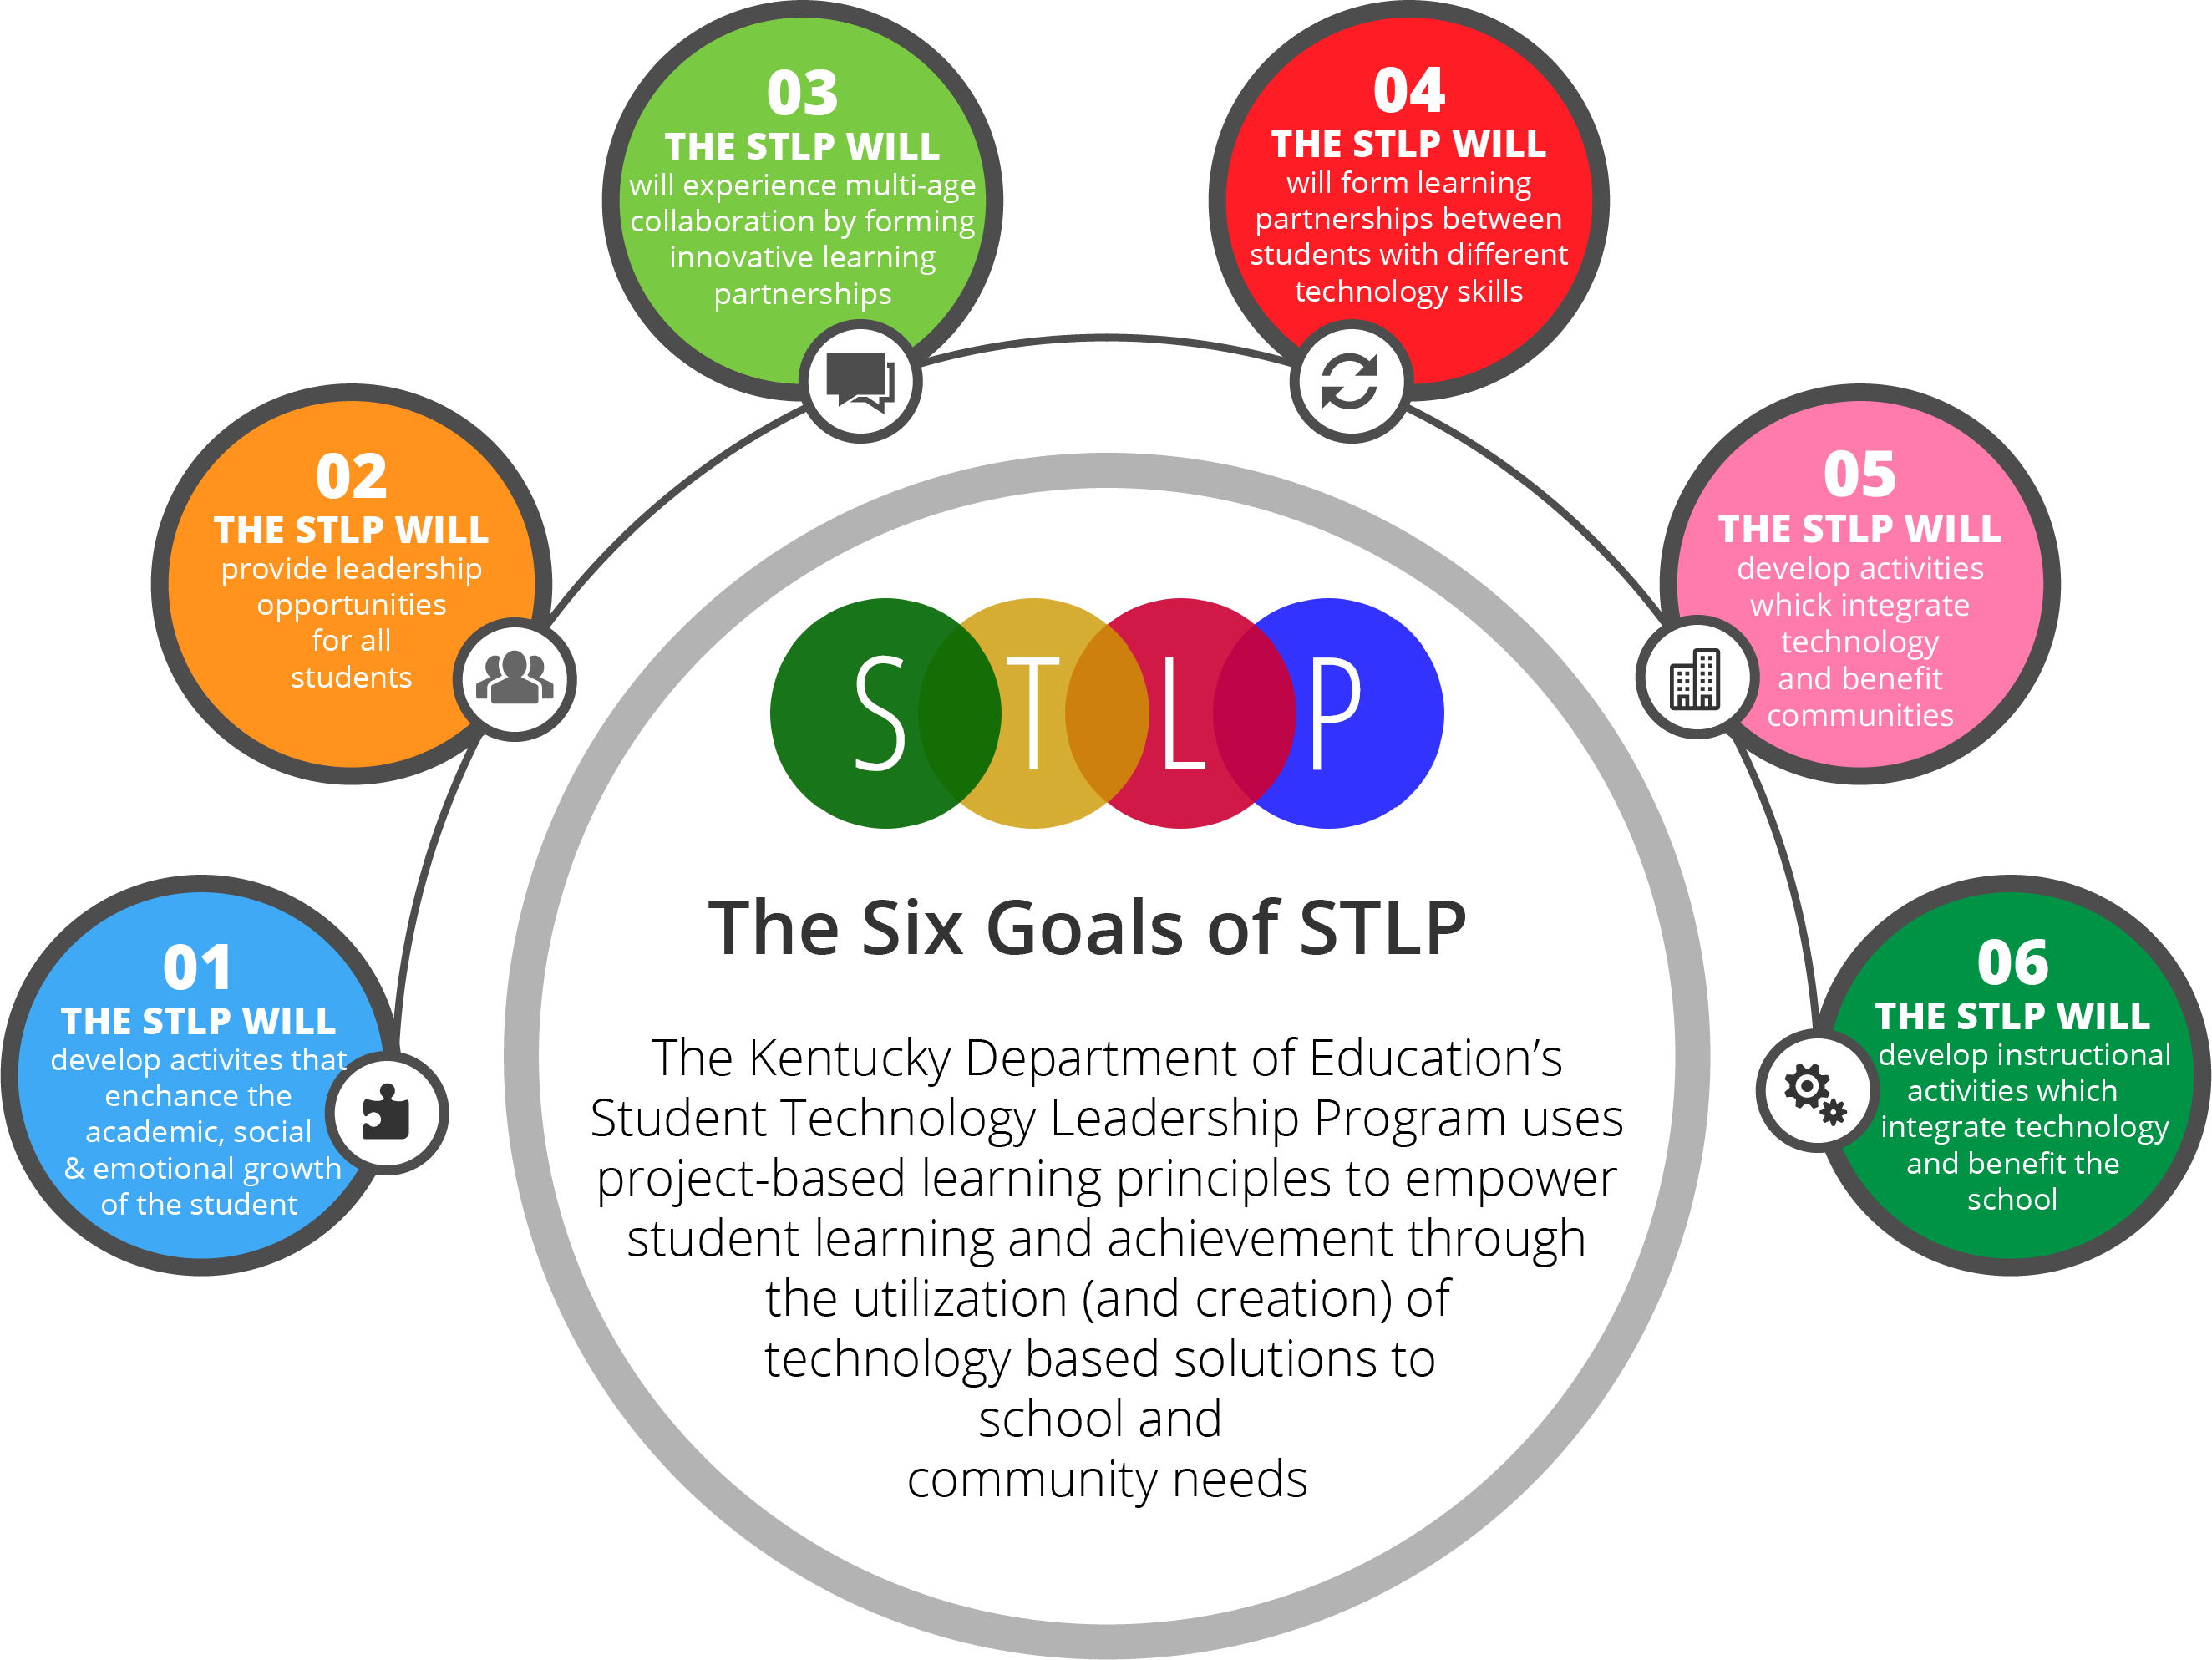 The Six Goals of STLP visual